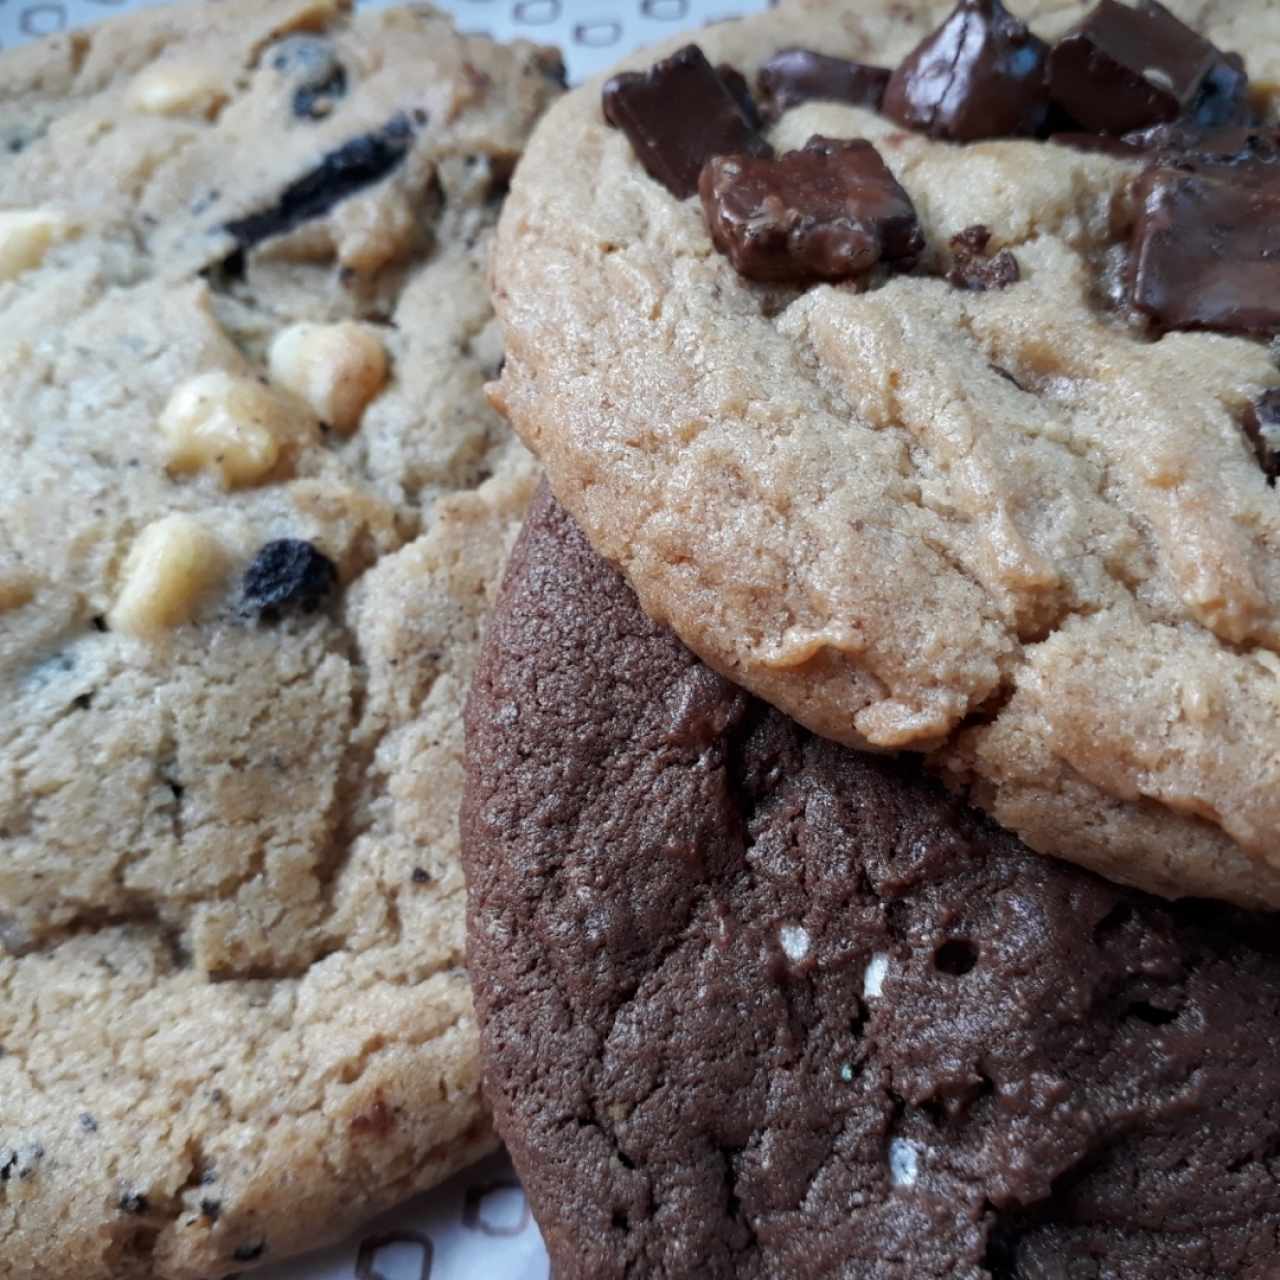 Galleta XL chocolate chunk, smores, cookies